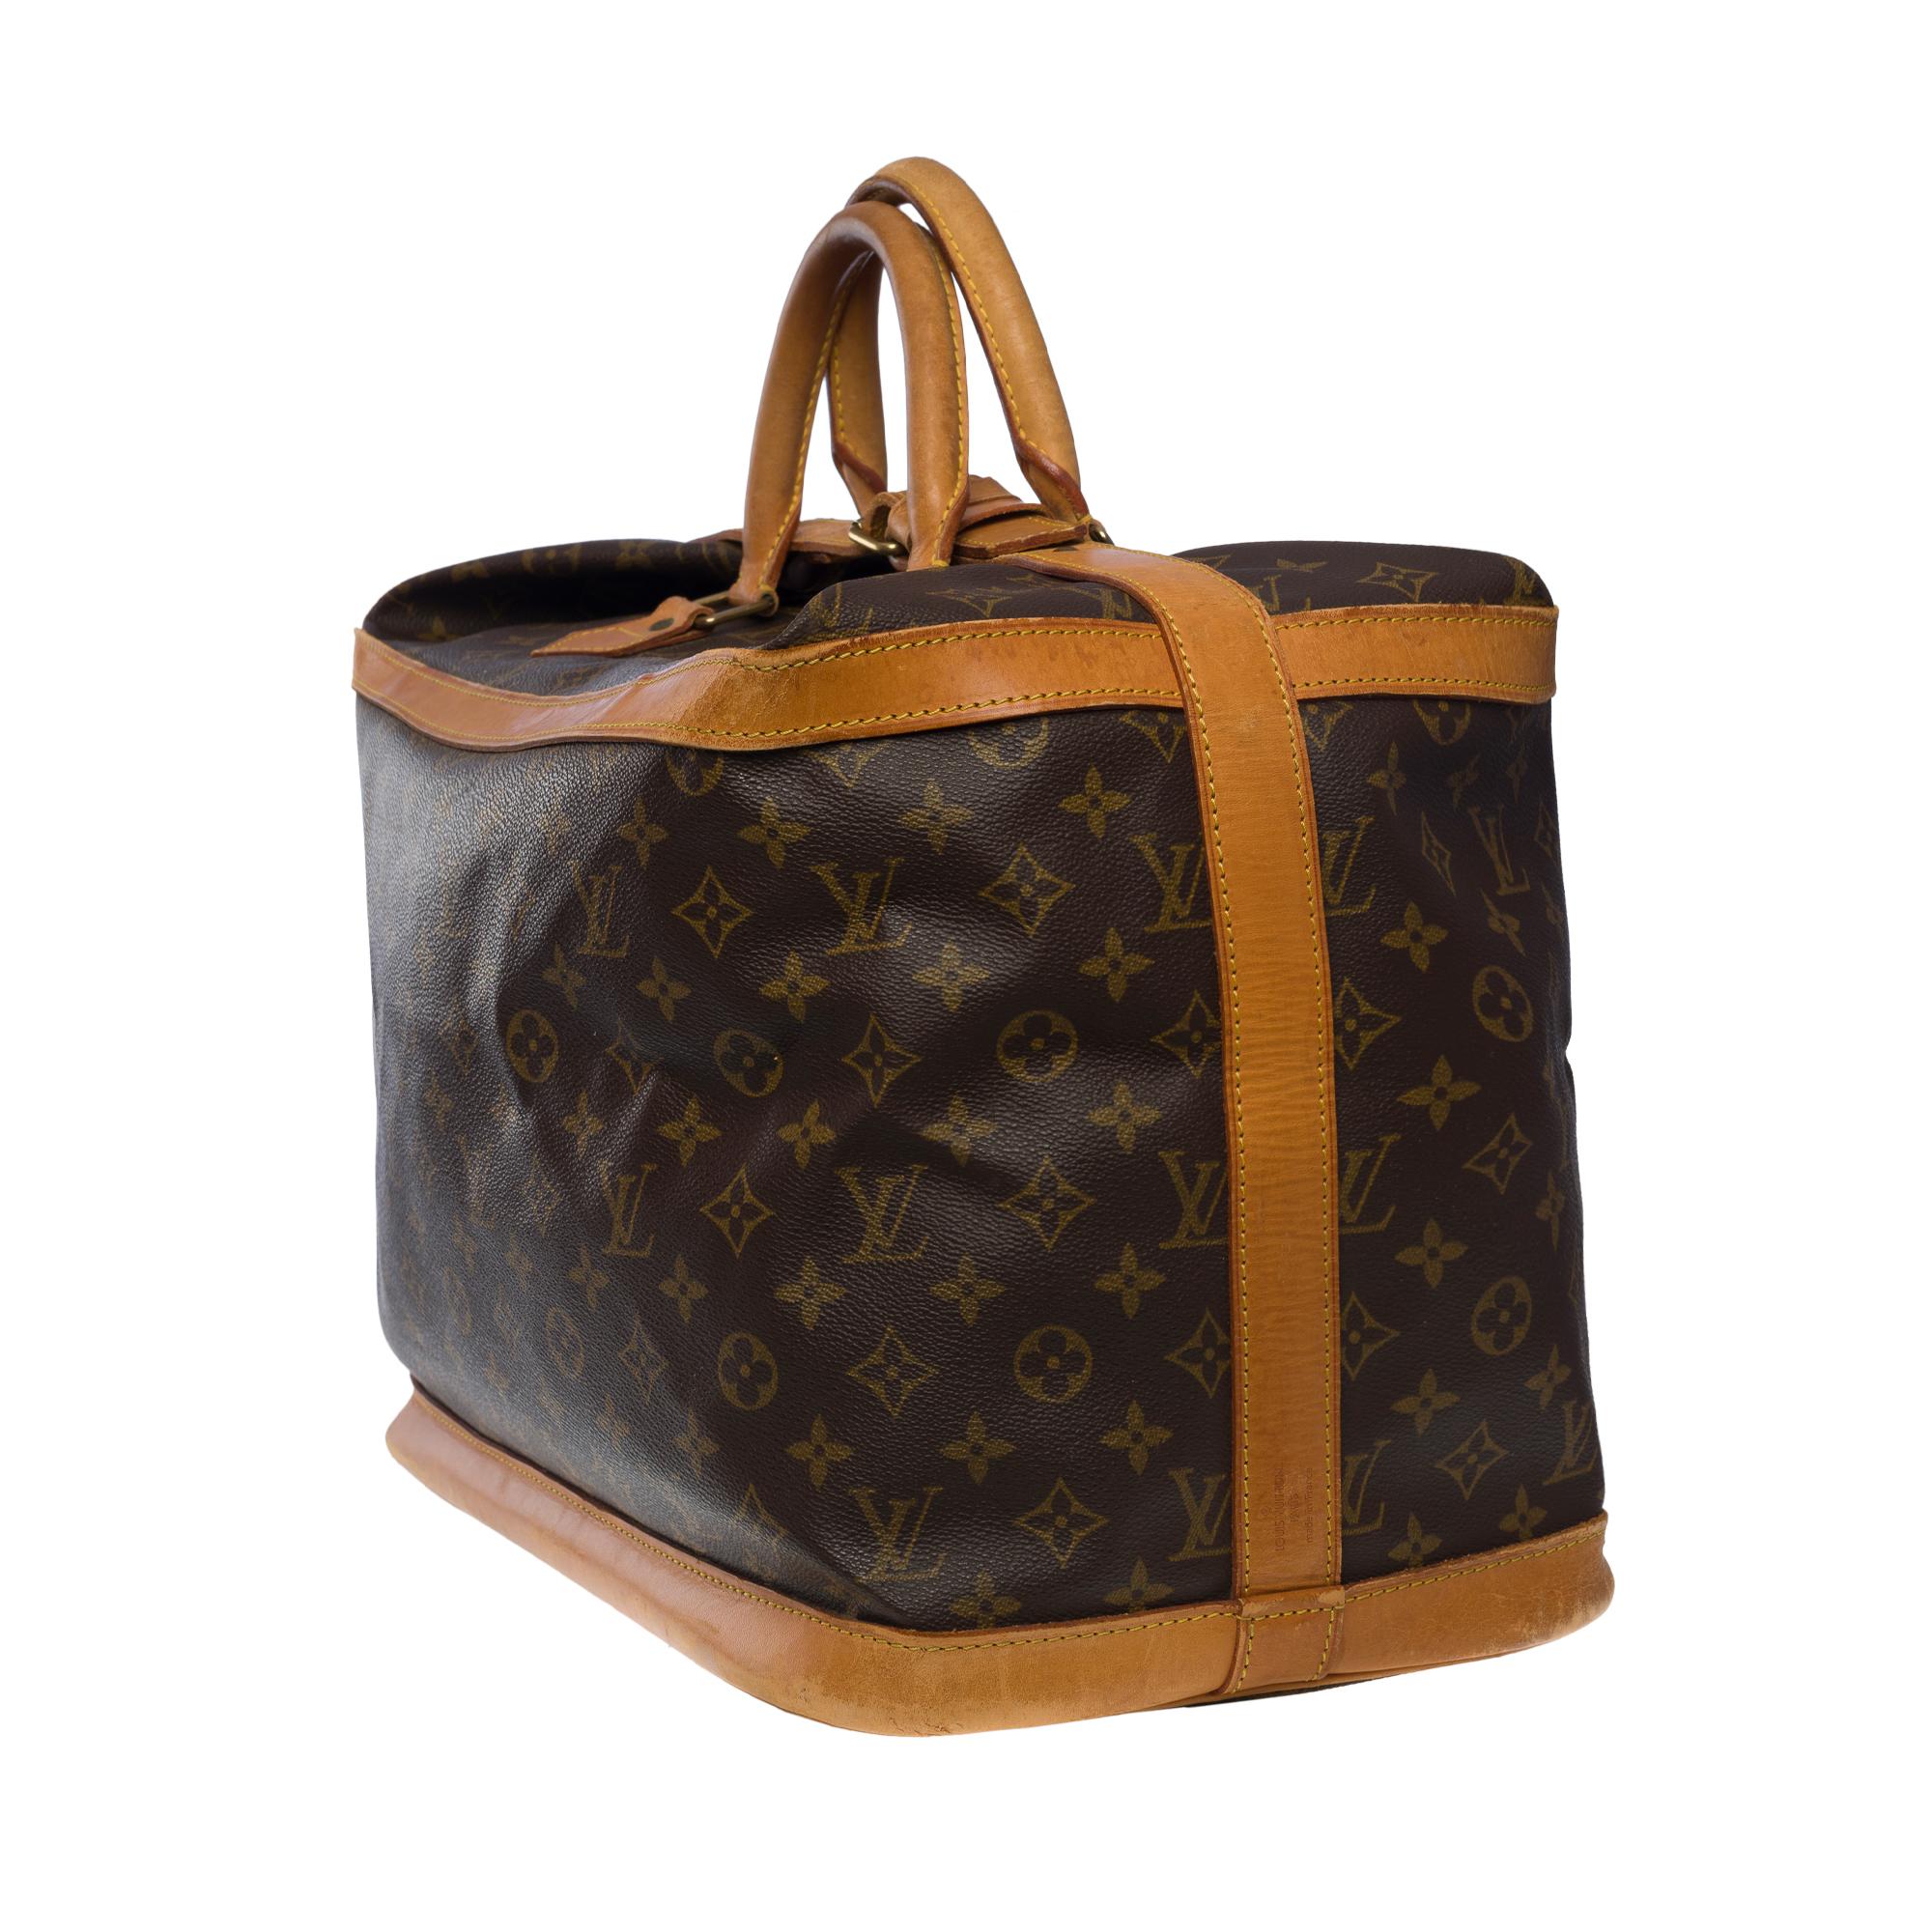 Women's or Men's Rare Louis Vuitton Cruiser 40 Travel bag in brown Monogram canvas, GHW